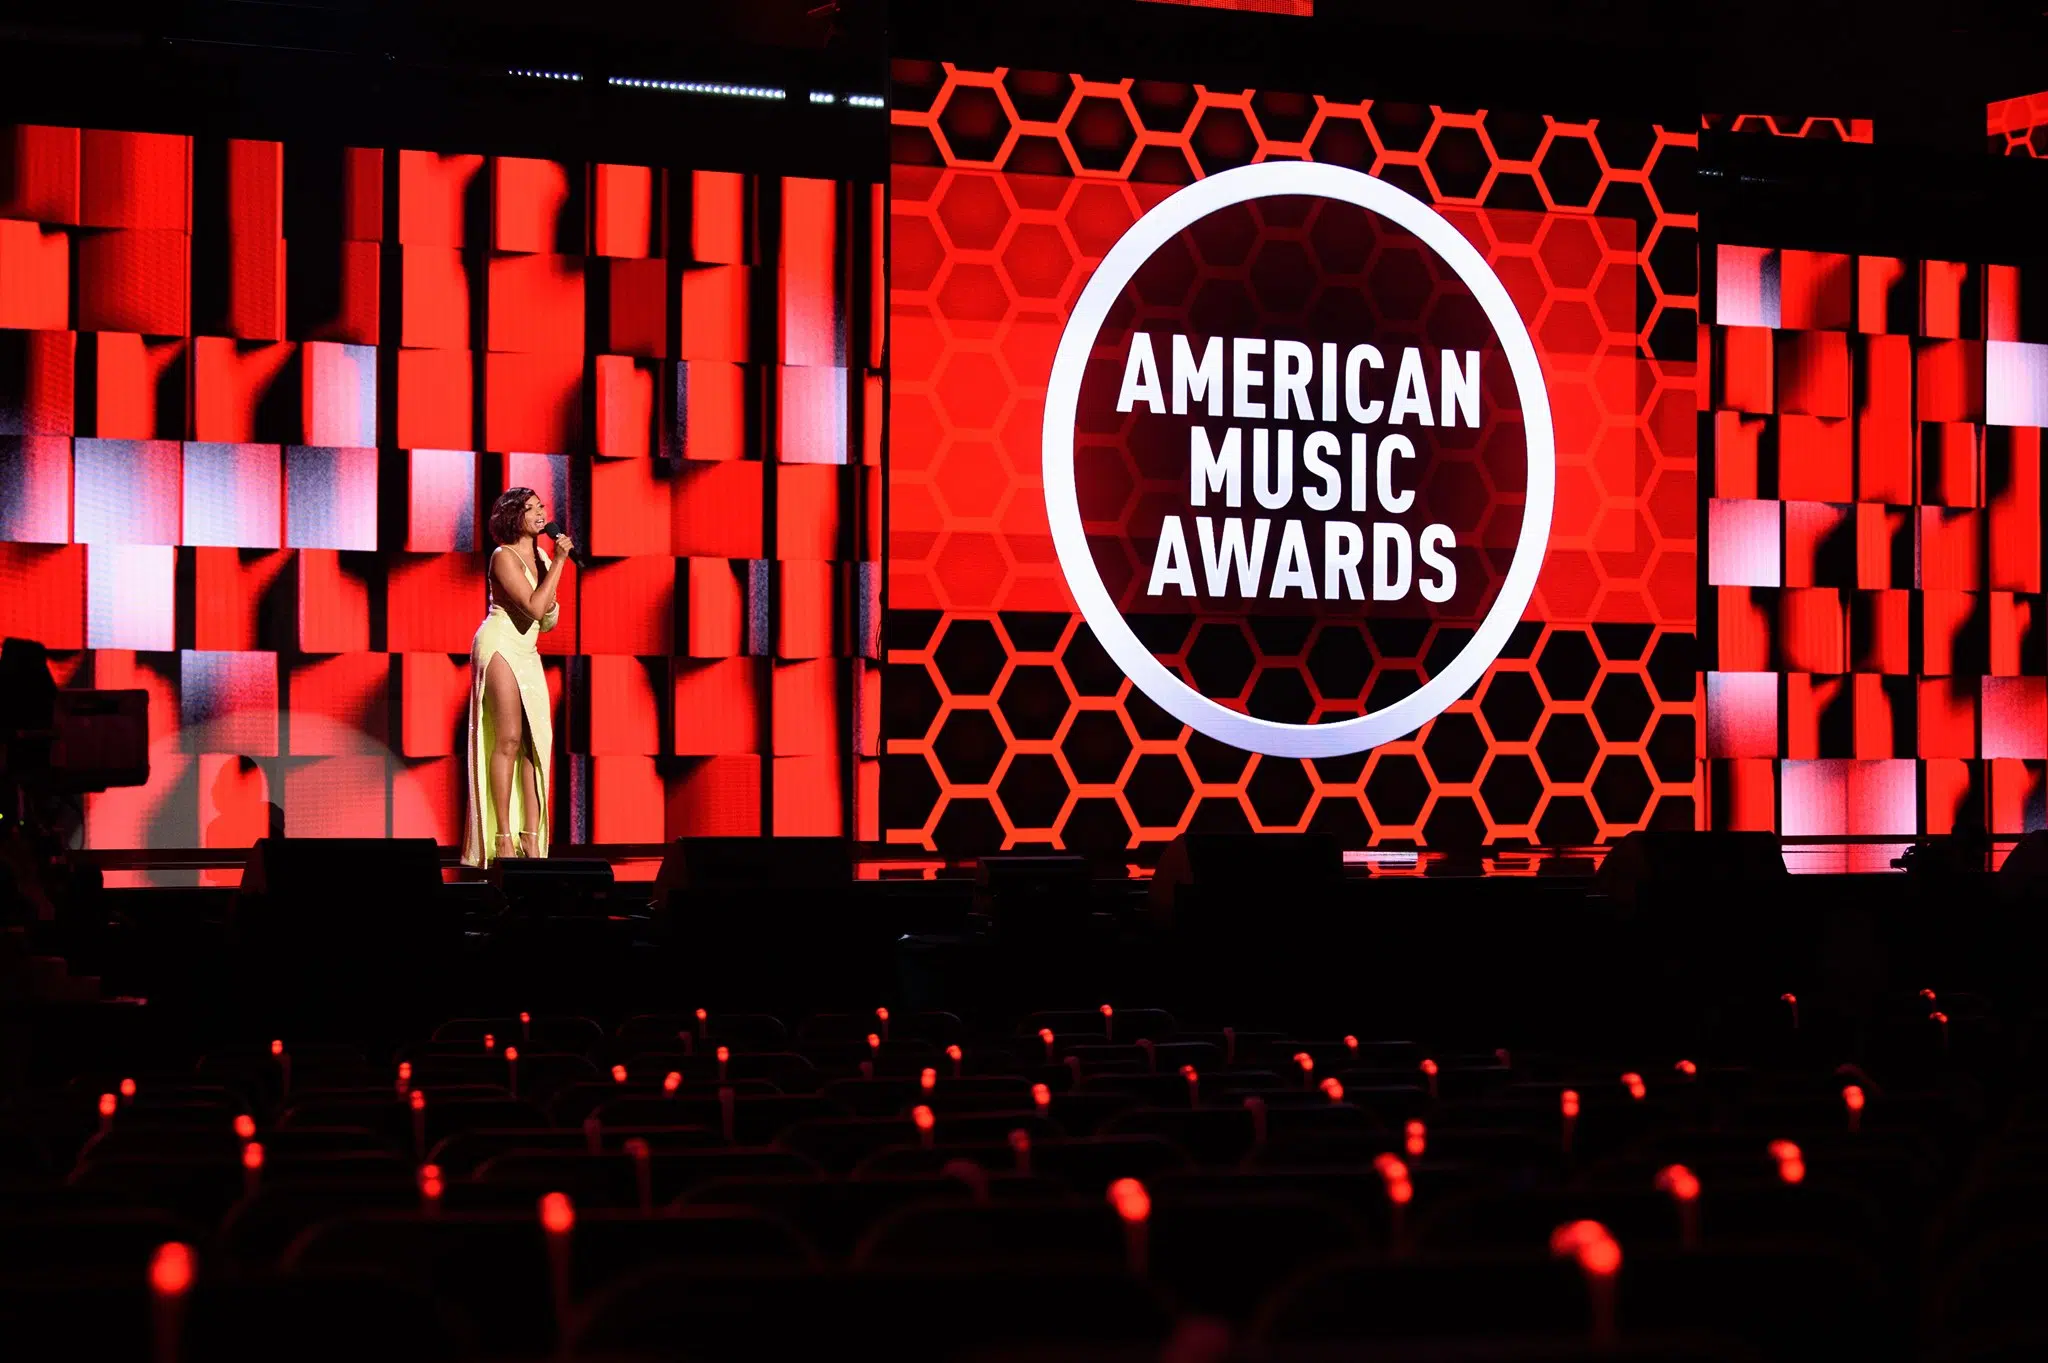 American Music Awards 2020 – Winners